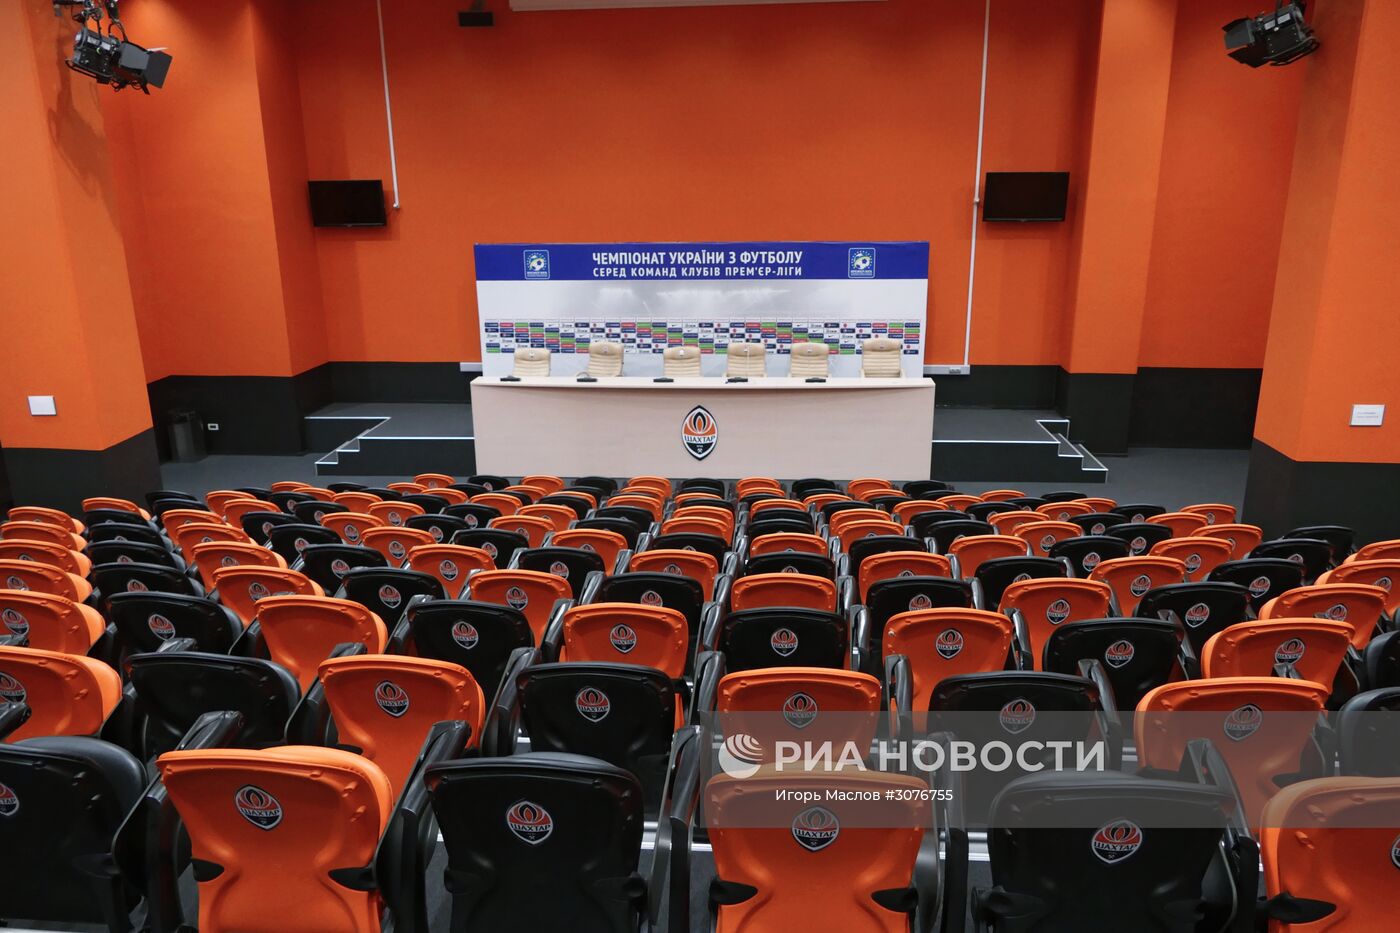 Стадион "Донбасс-Арена" в Донецке